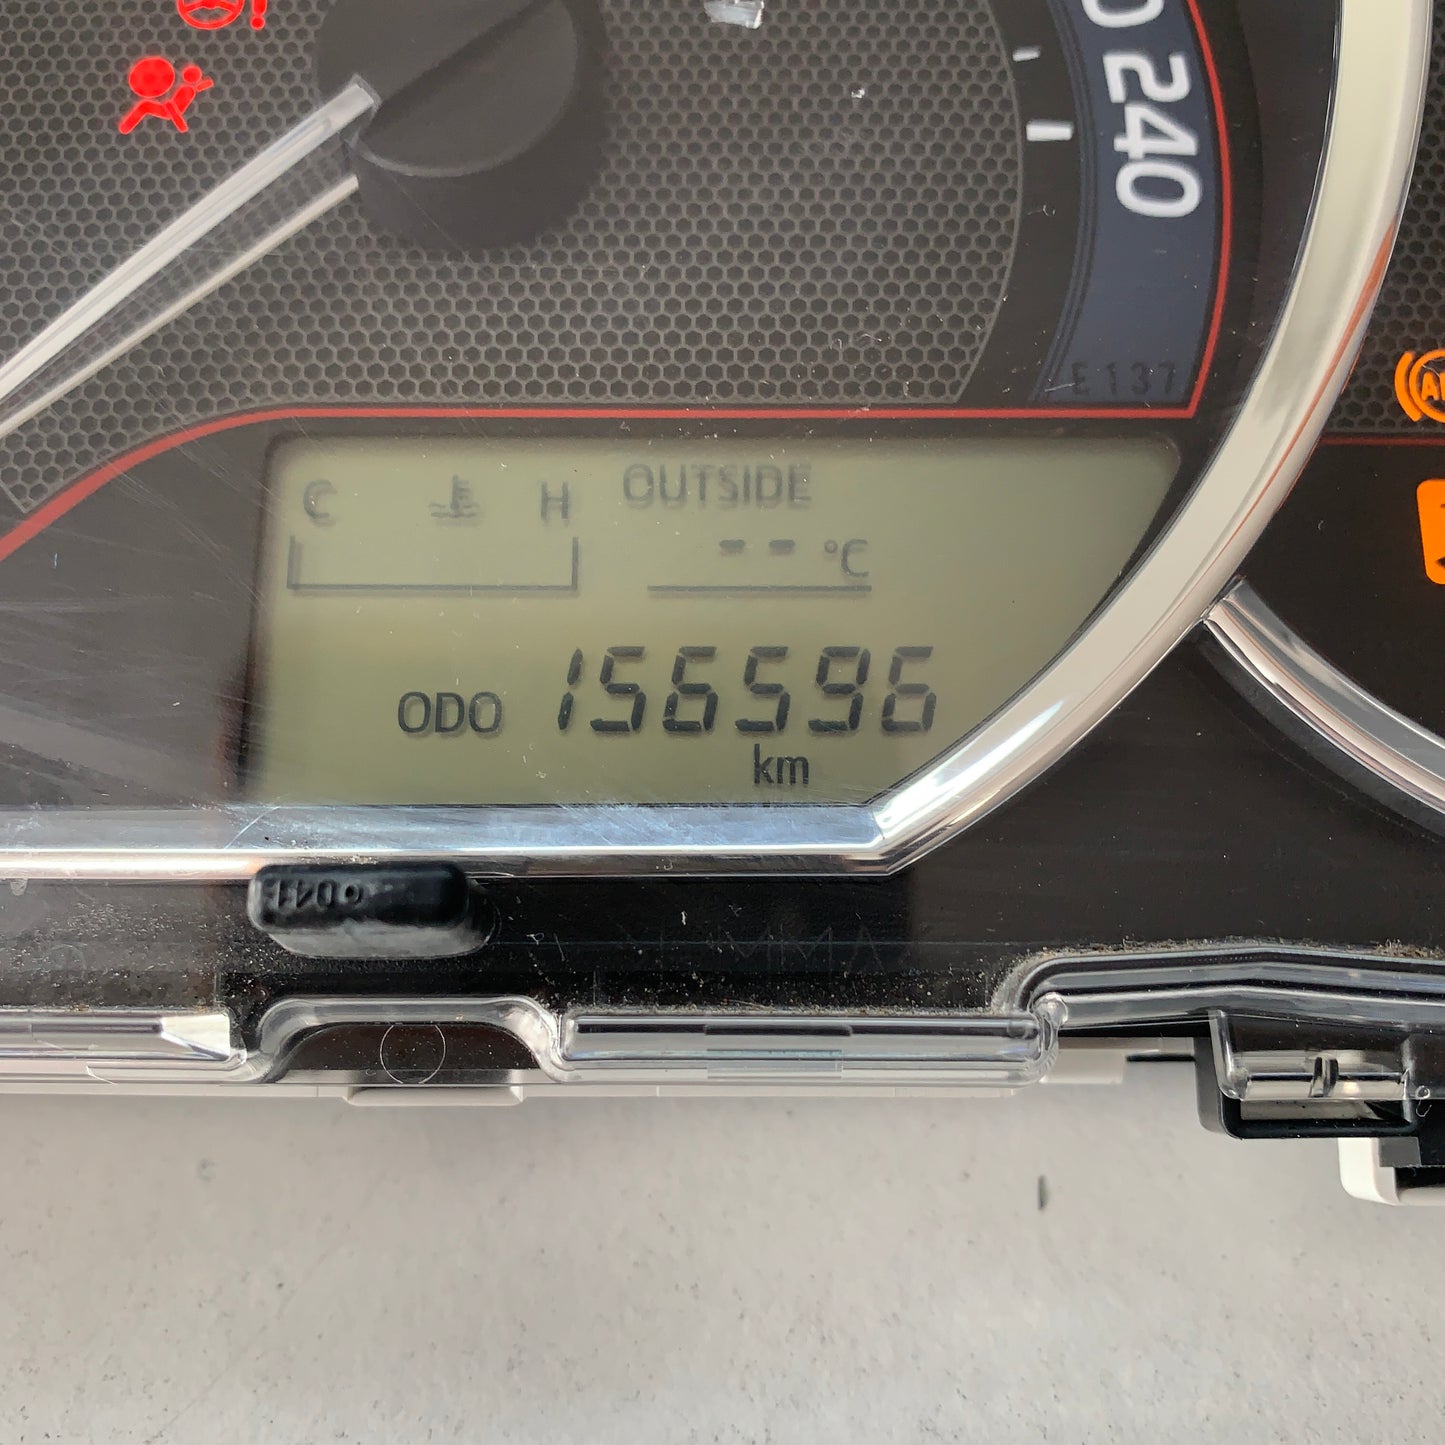 Toyota Corolla Hatchback Instrument Cluster ZRE182R 2012 2013 2014 2015 156596km